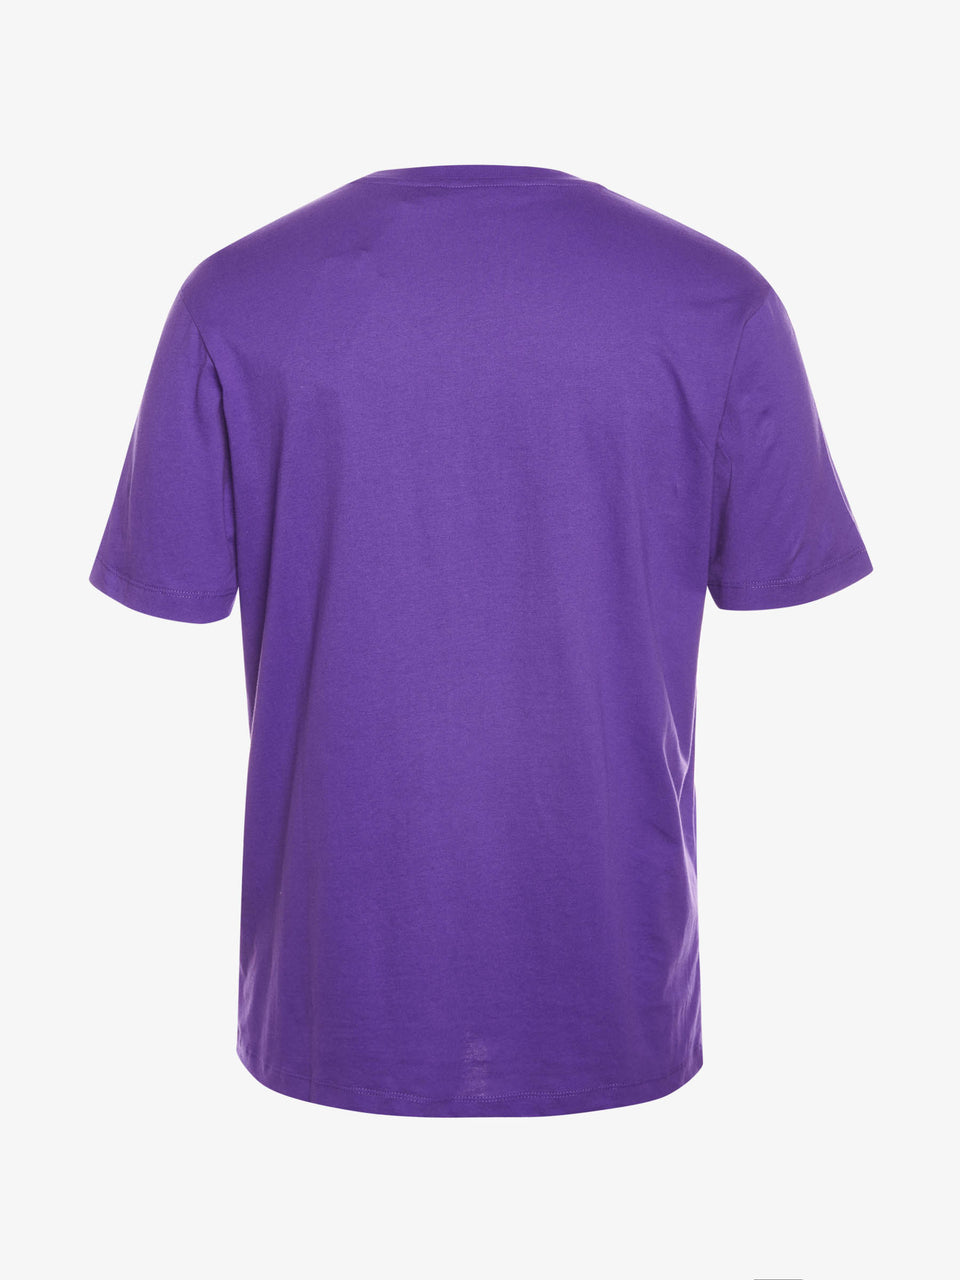 WeSC_Mason_Hazy_T-Shirt_Tillands_Purple